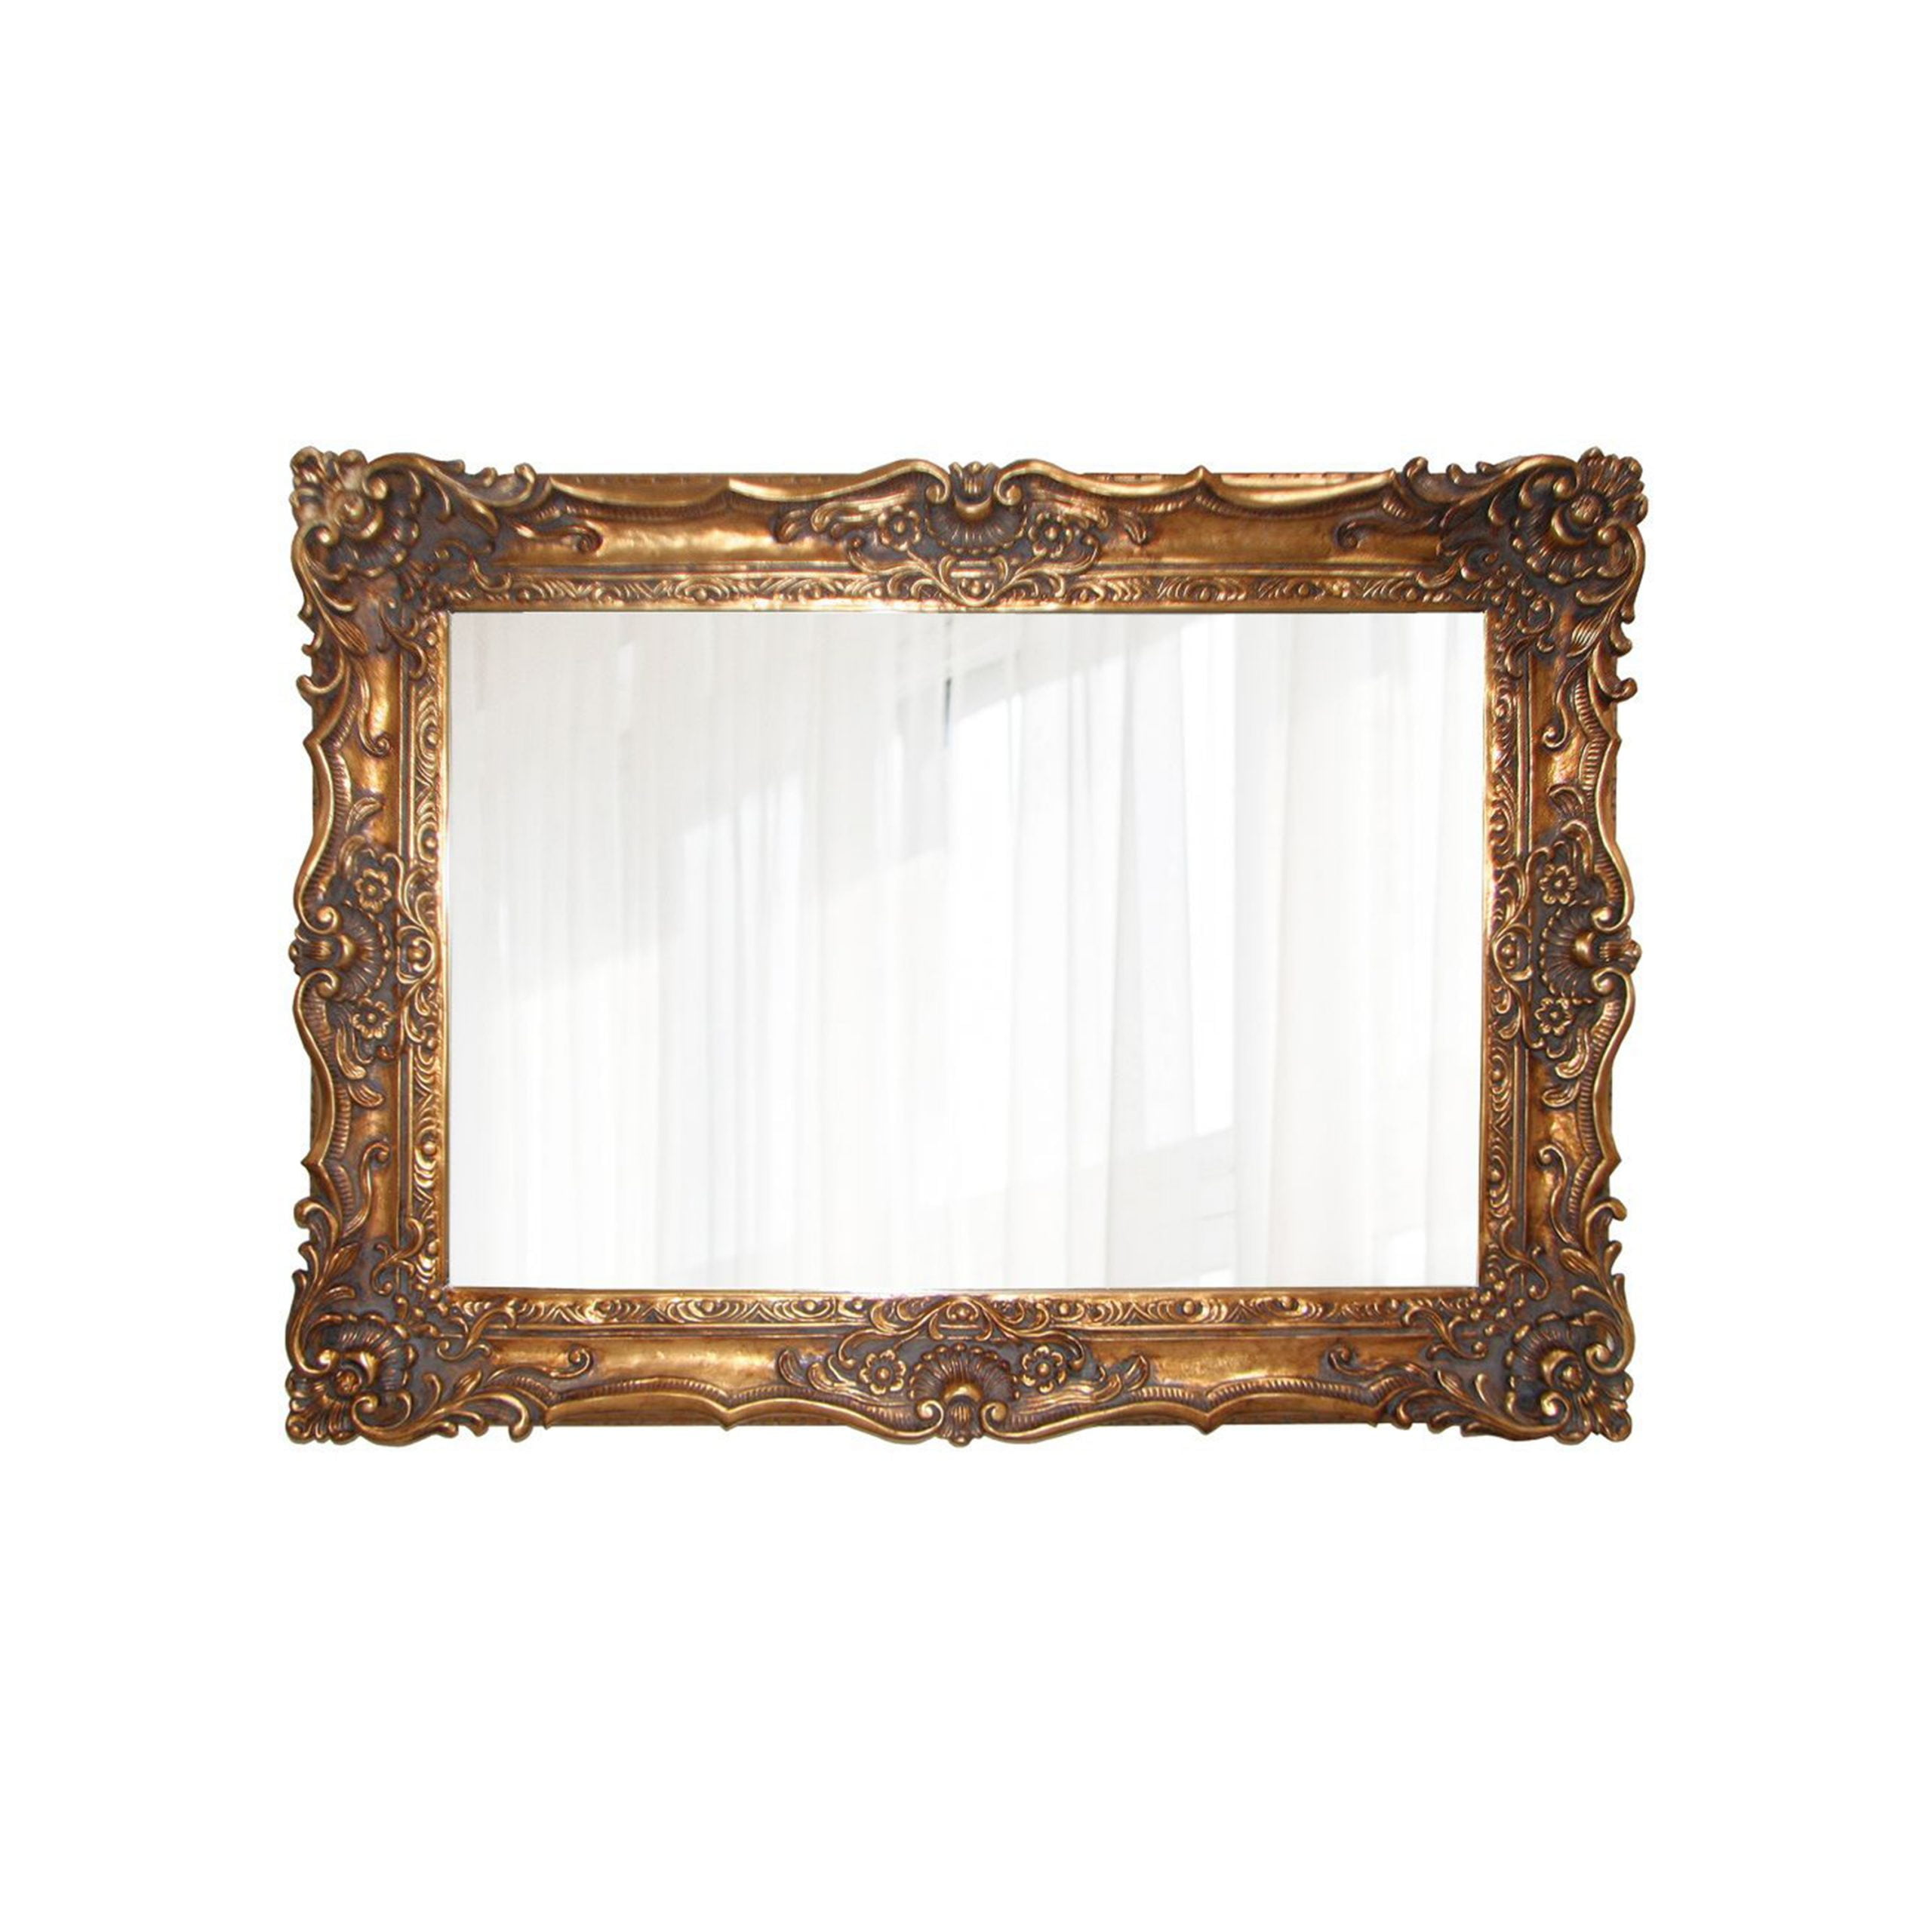 Gold rectangular mirror